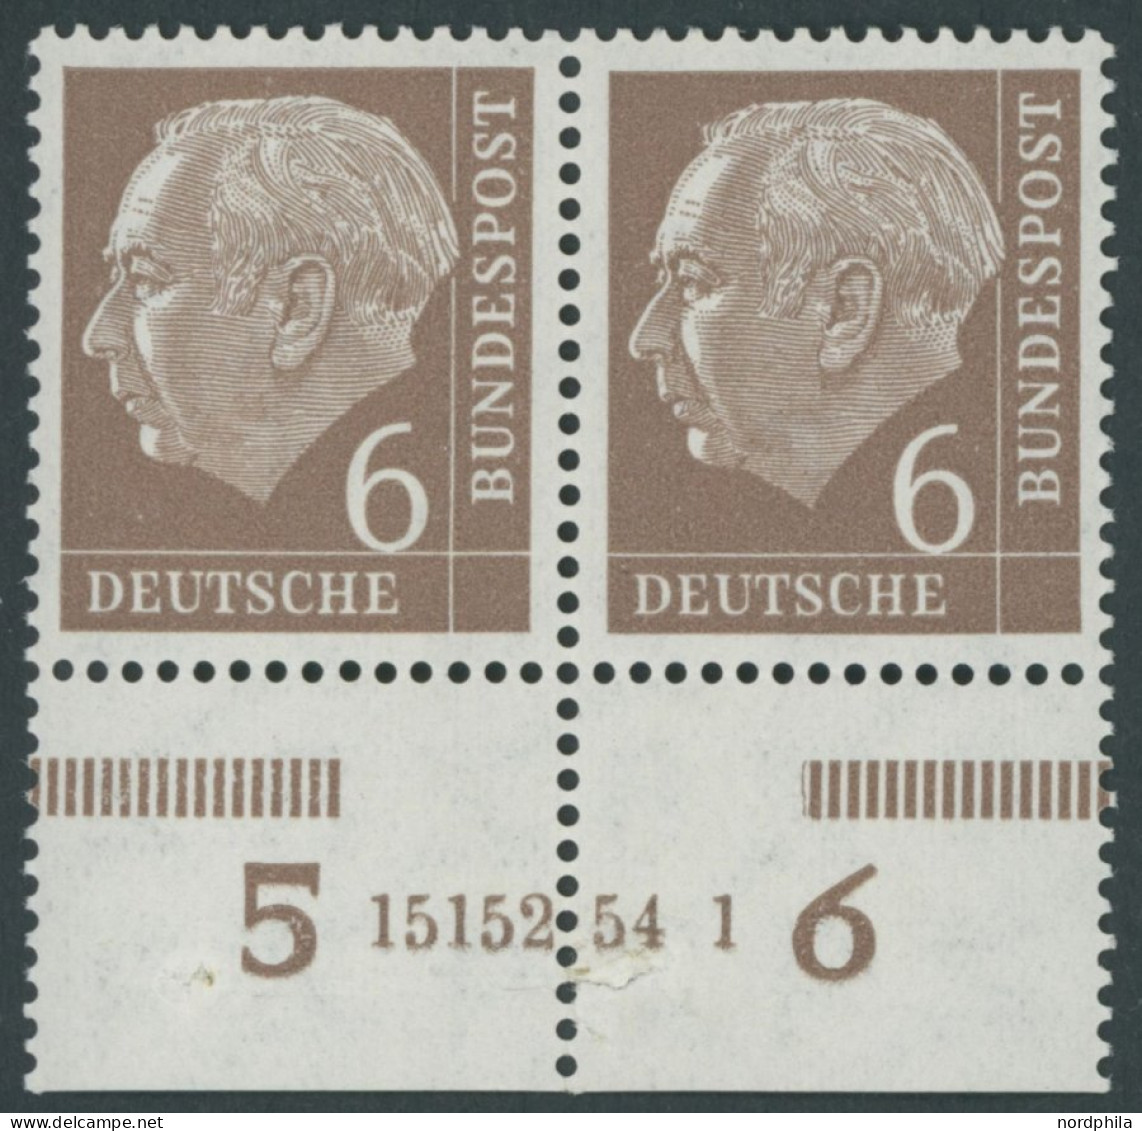 BUNDESREPUBLIK 180xHAN **, 1954, 6 Pf. Heuss, Unterrandpaar Mit HAN 15152.54 1, (Klammerspur), Marken  Postfrisch, Prach - Ongebruikt